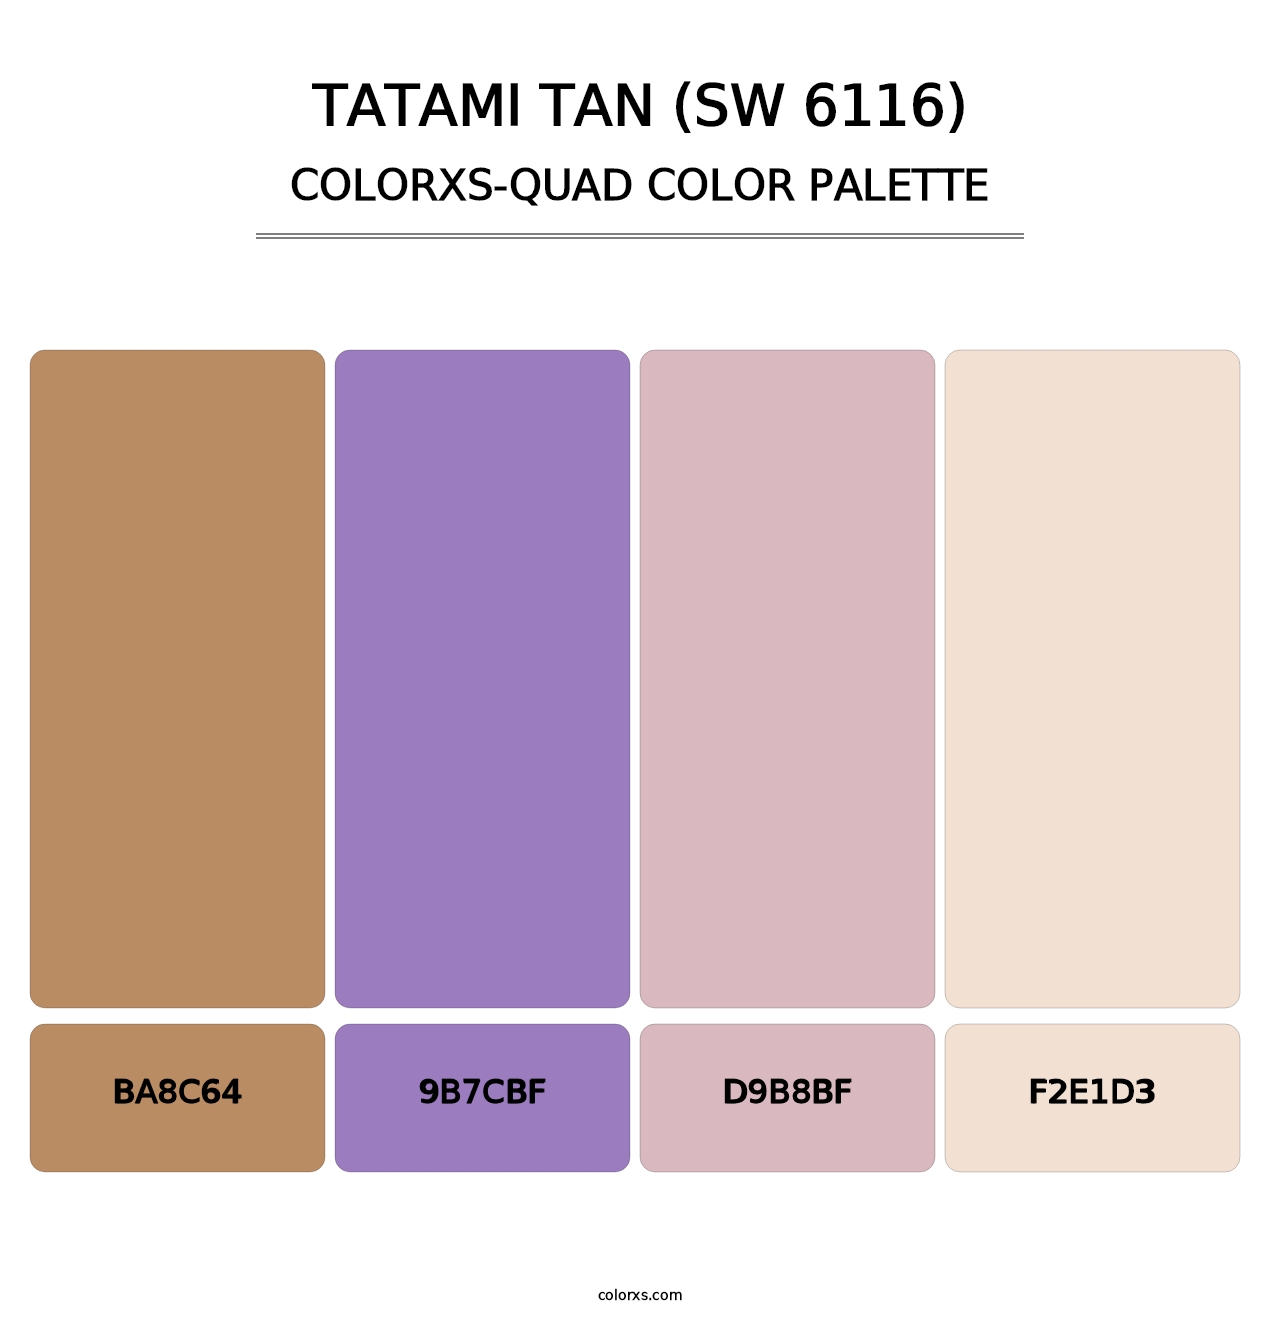 Tatami Tan (SW 6116) - Colorxs Quad Palette